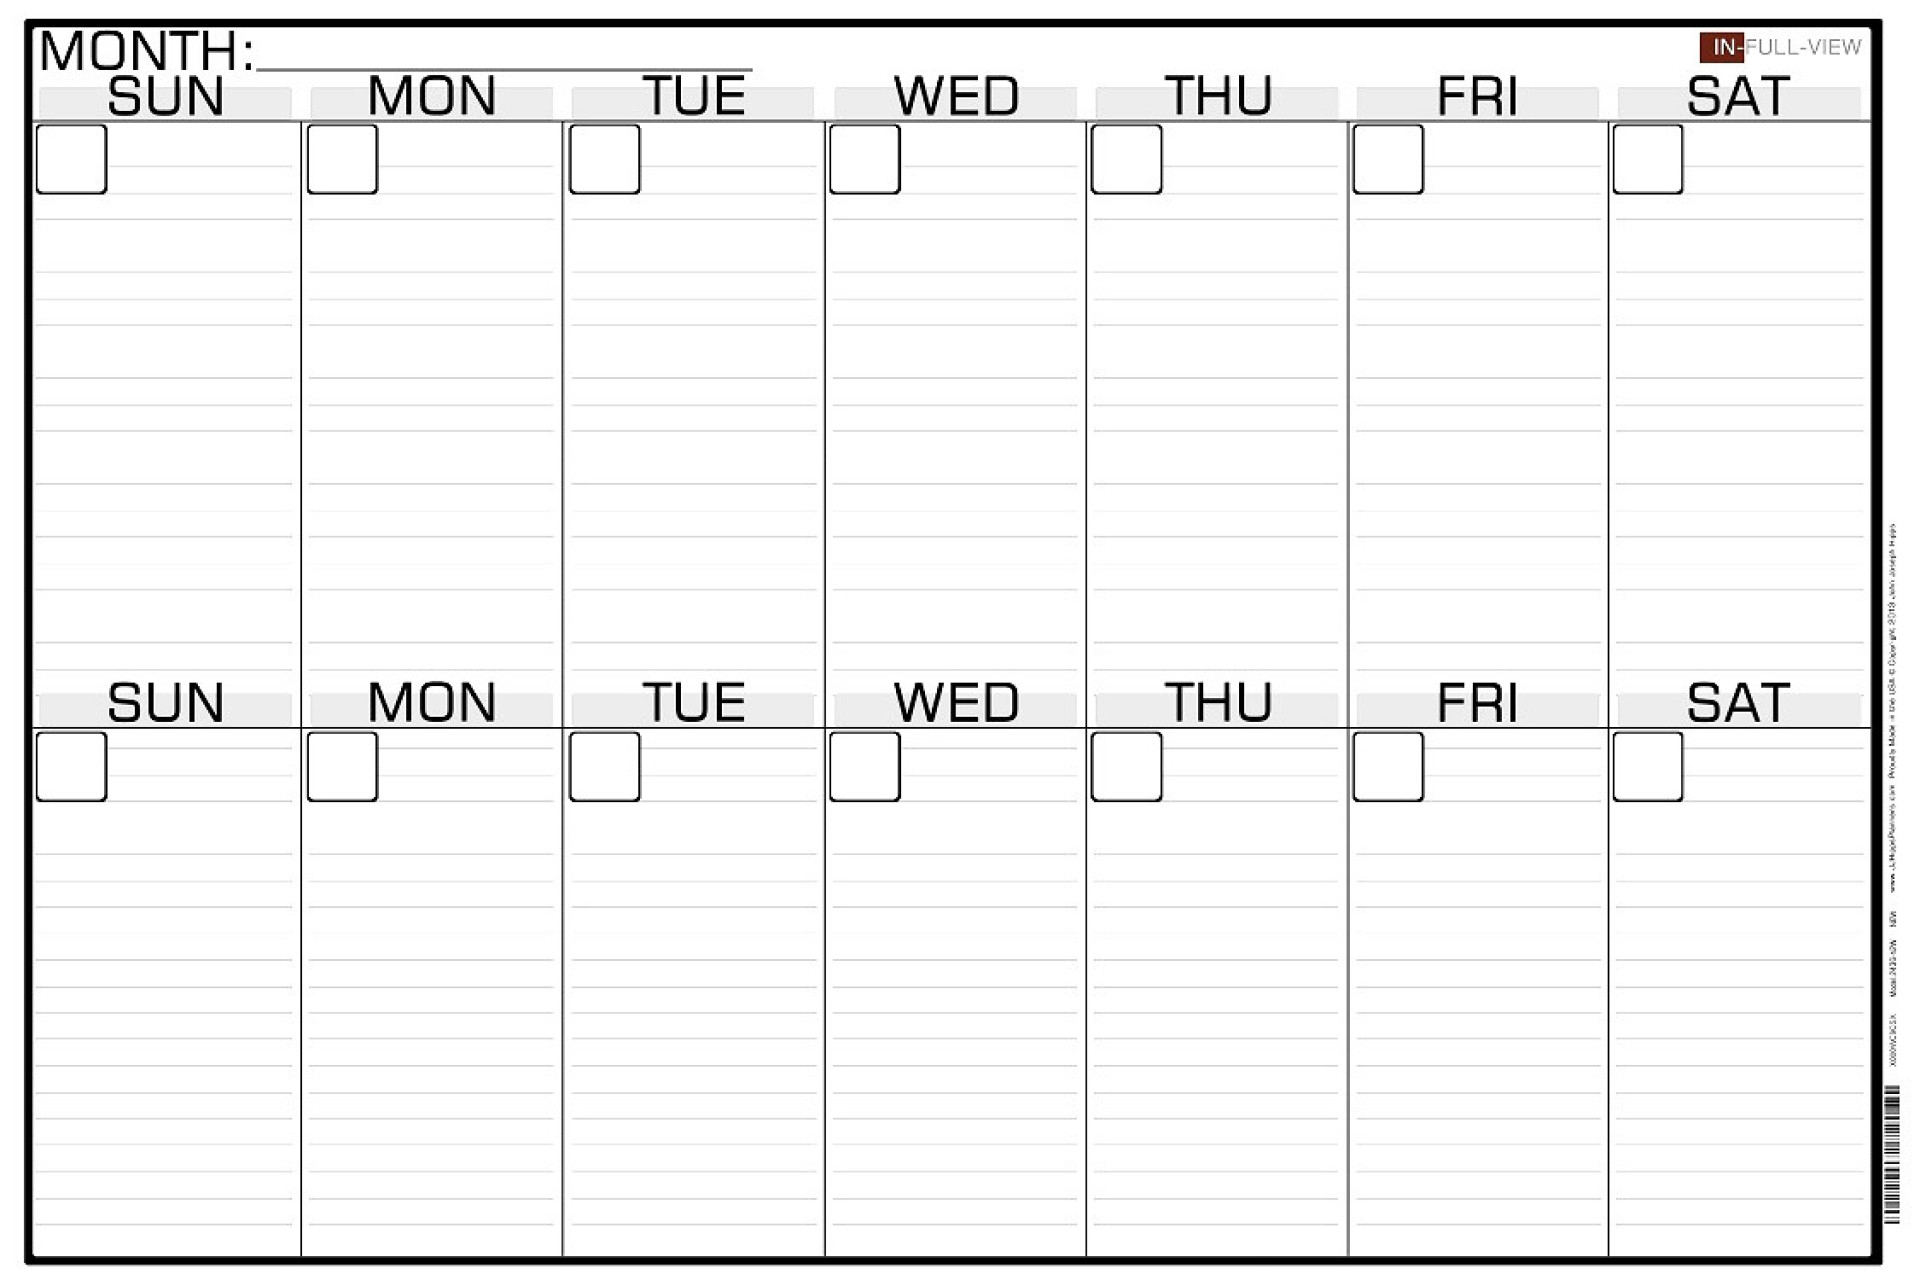 two-week schedule template